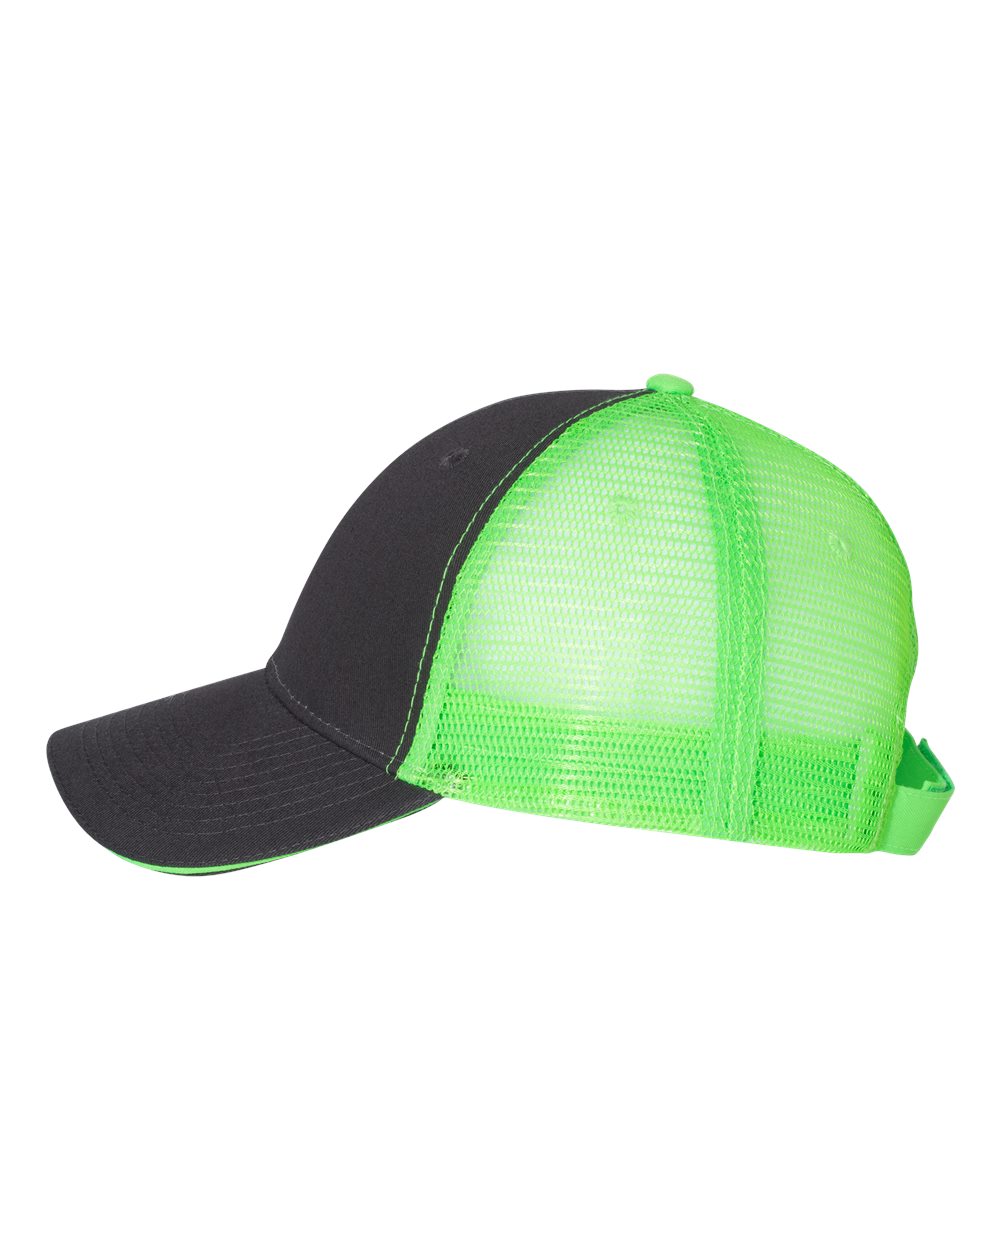 Sandwich Trucker Cap - Charcoal/Neon Green